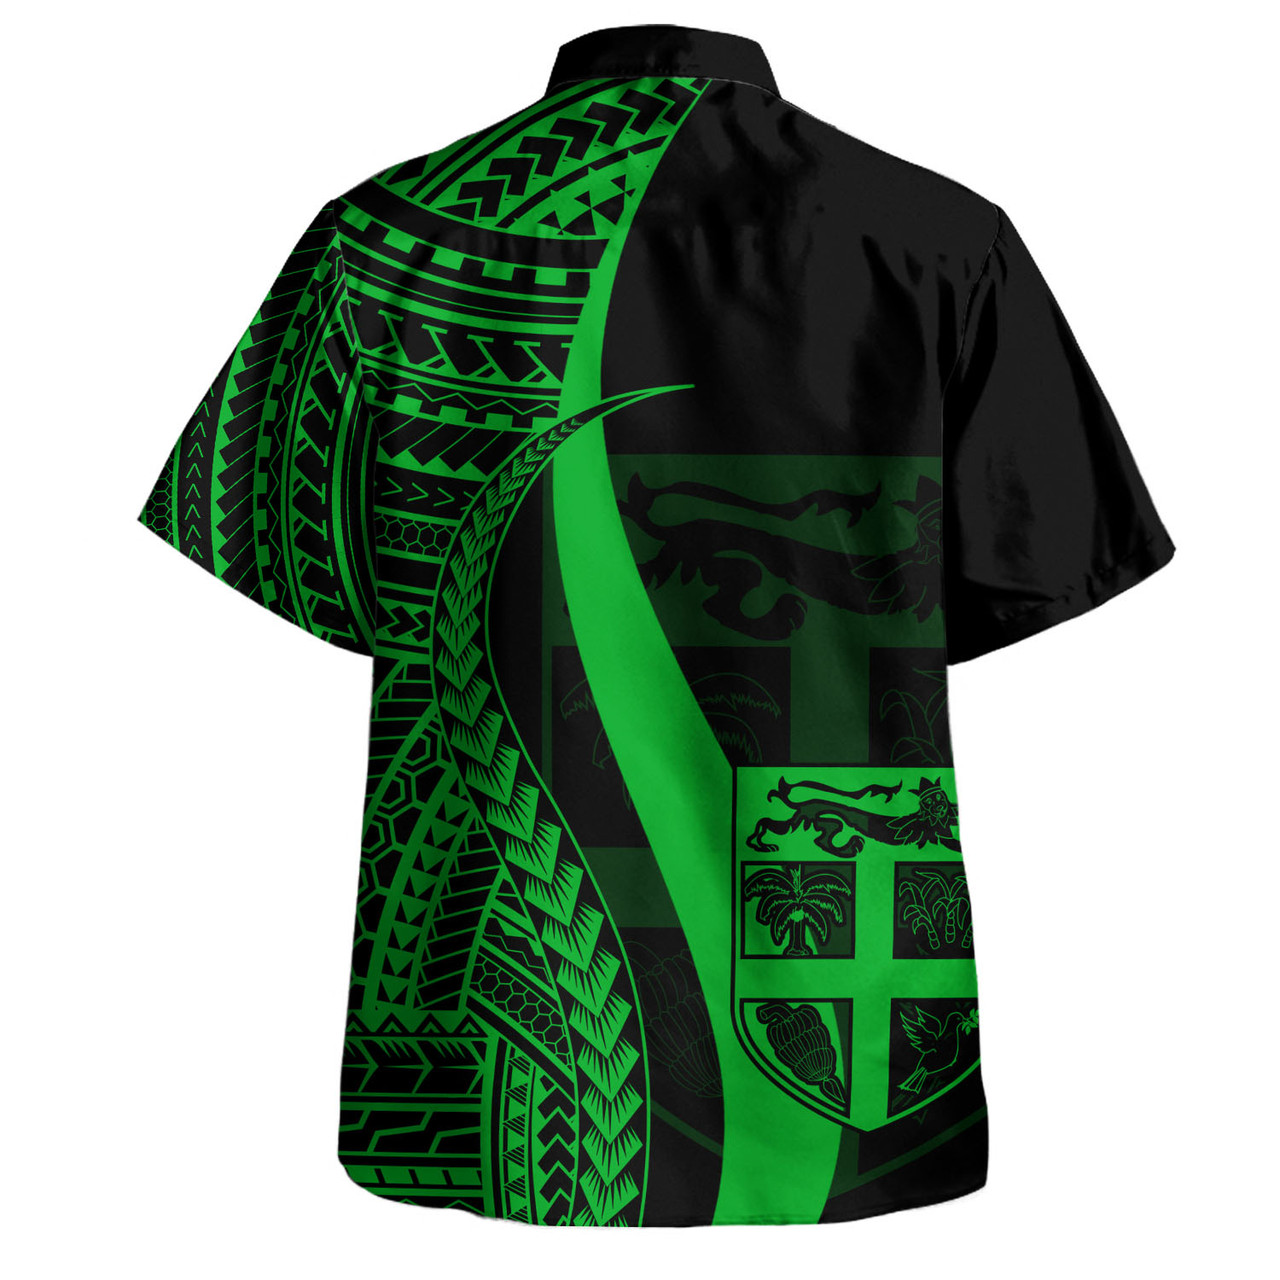 Fiji Combo Dress And Shirt - Polynesian Tentacle Tribal Pattern Green